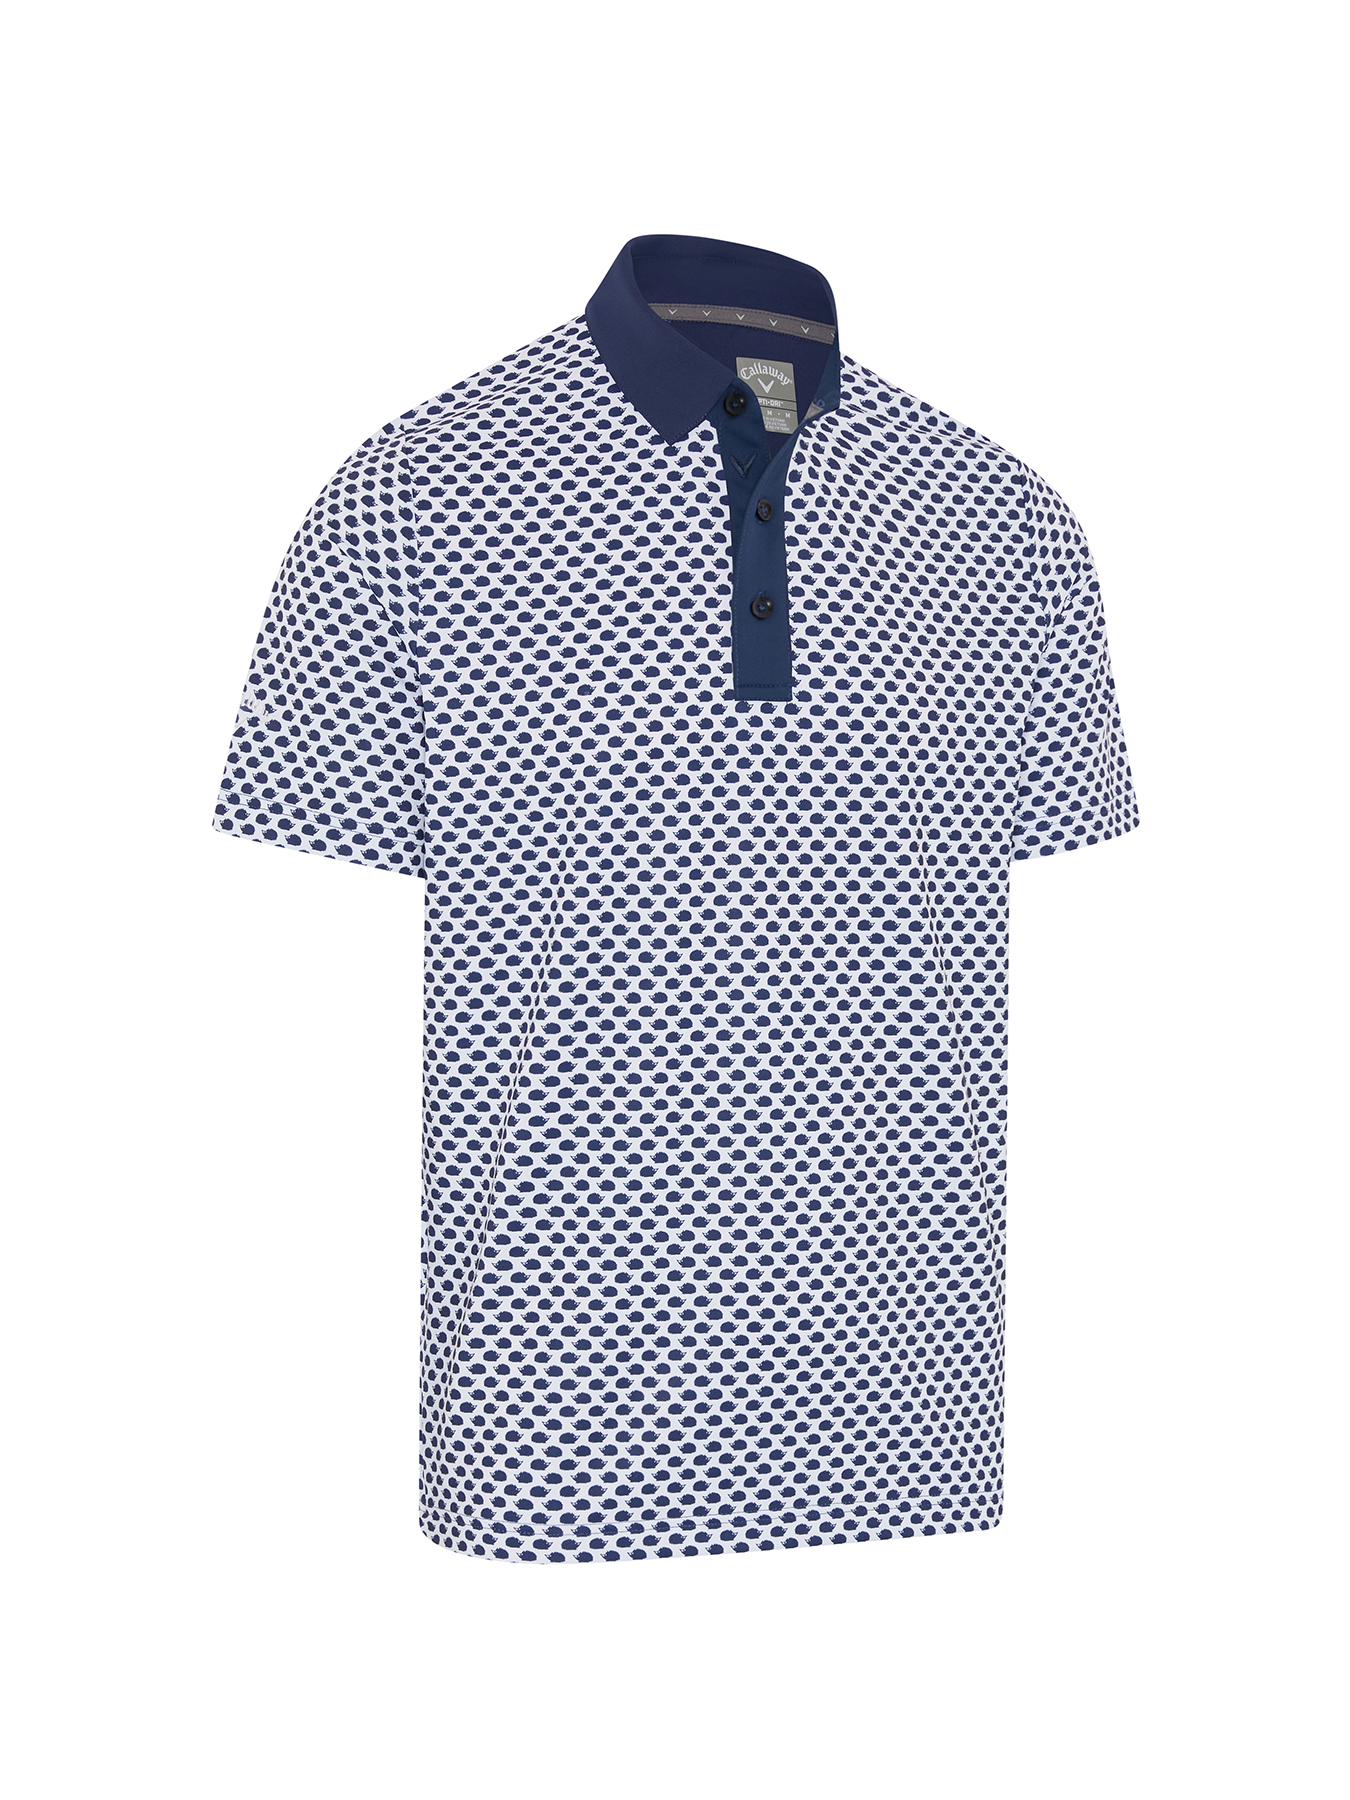 Callaway Hedgehog pánské golfové triko, bílé/tmavě modré, vel. S